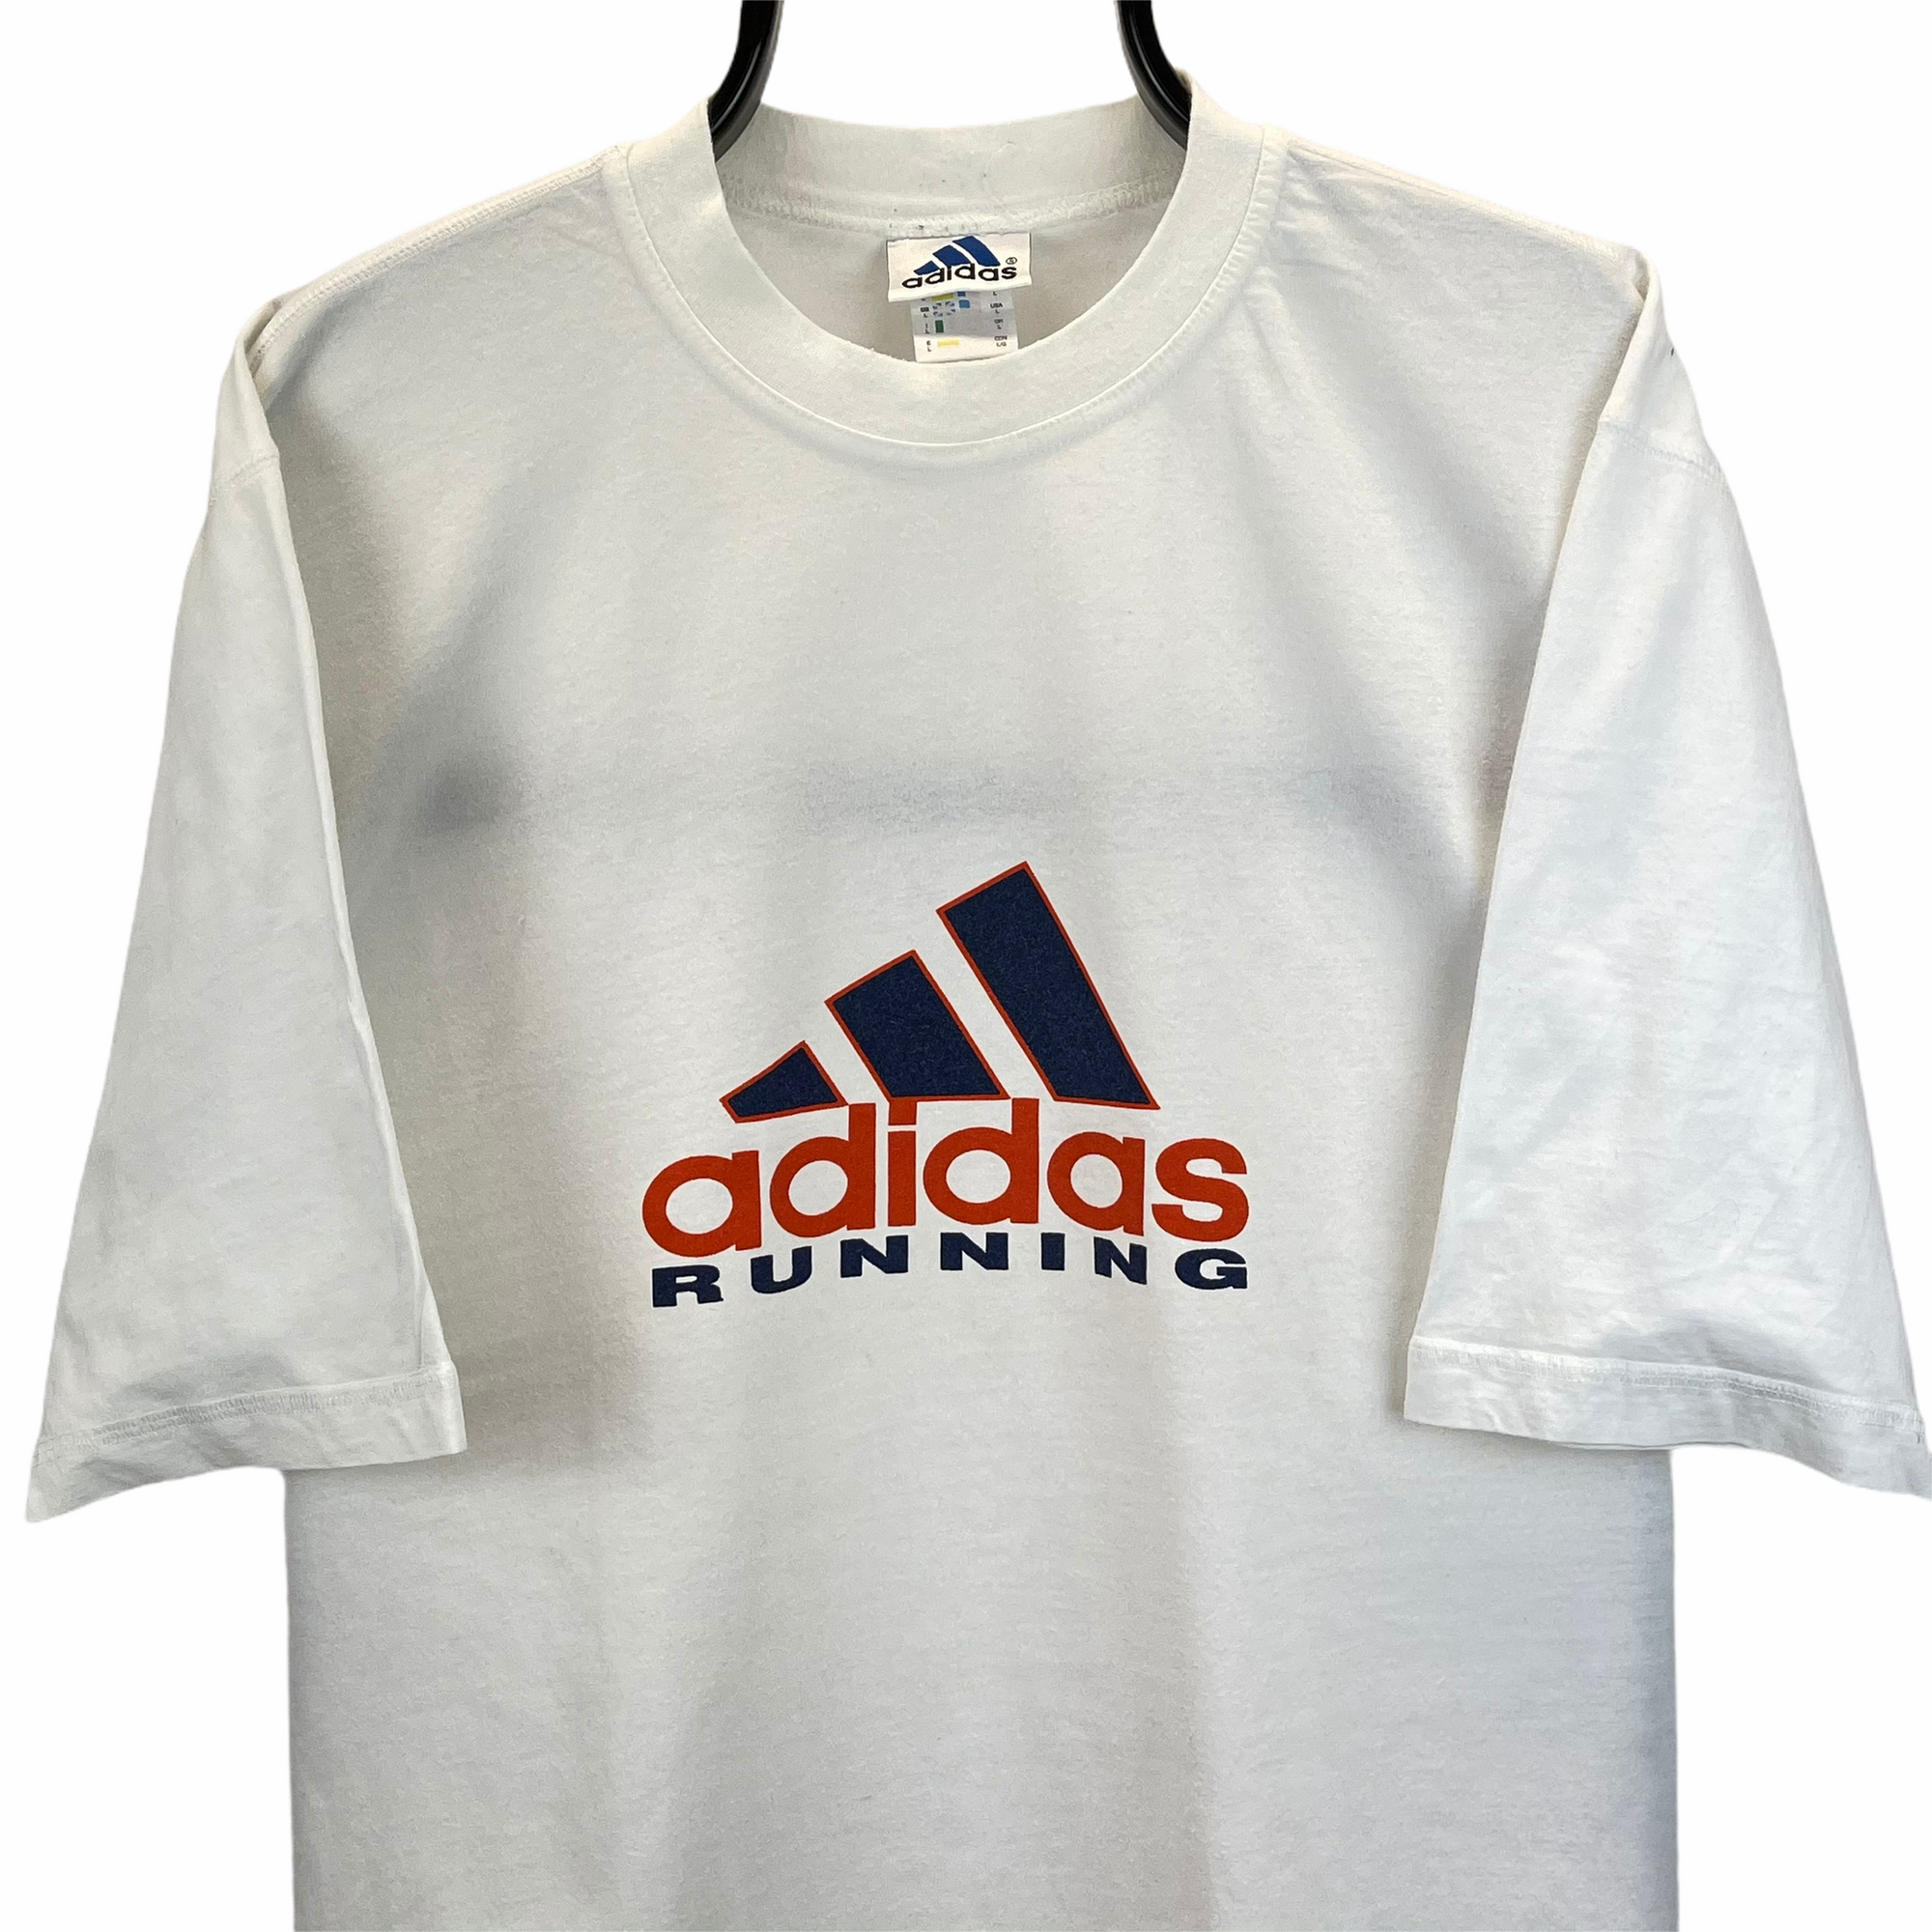 Vintage 90s Adidas Running Tee in White - Men's Large/Women's XL